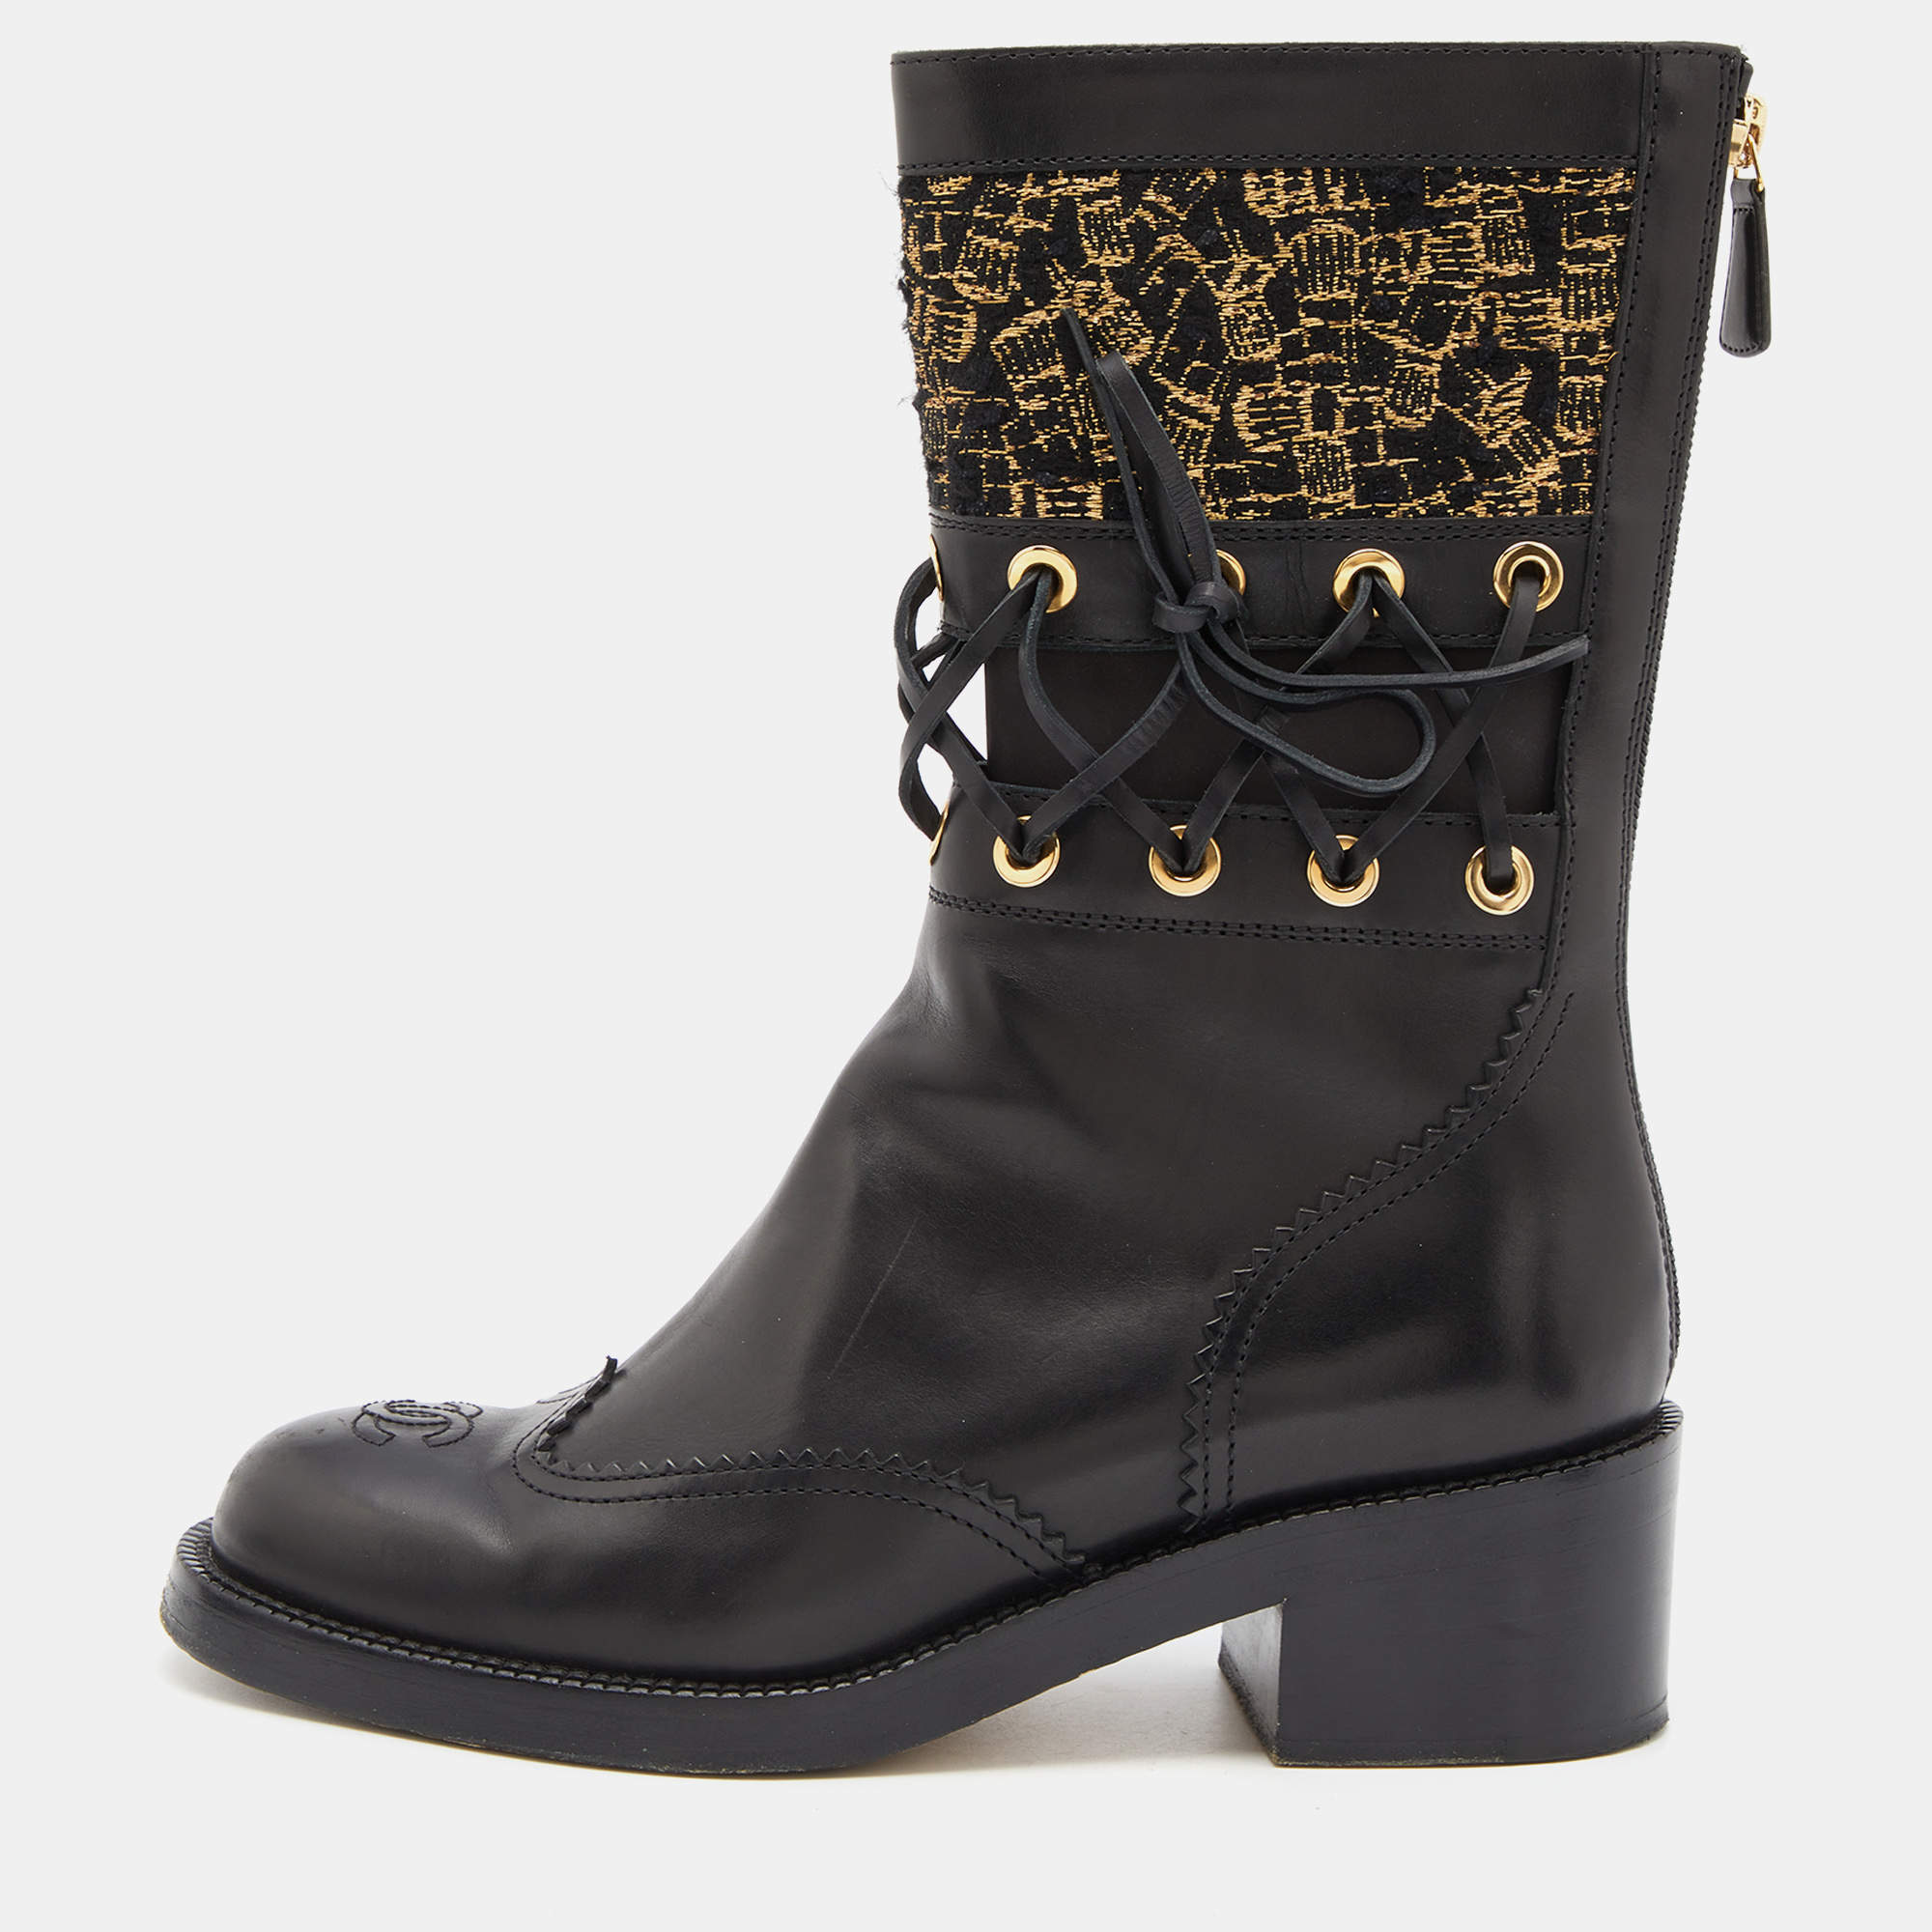 Chanel Black Leather Wedge Escarpins Shoe